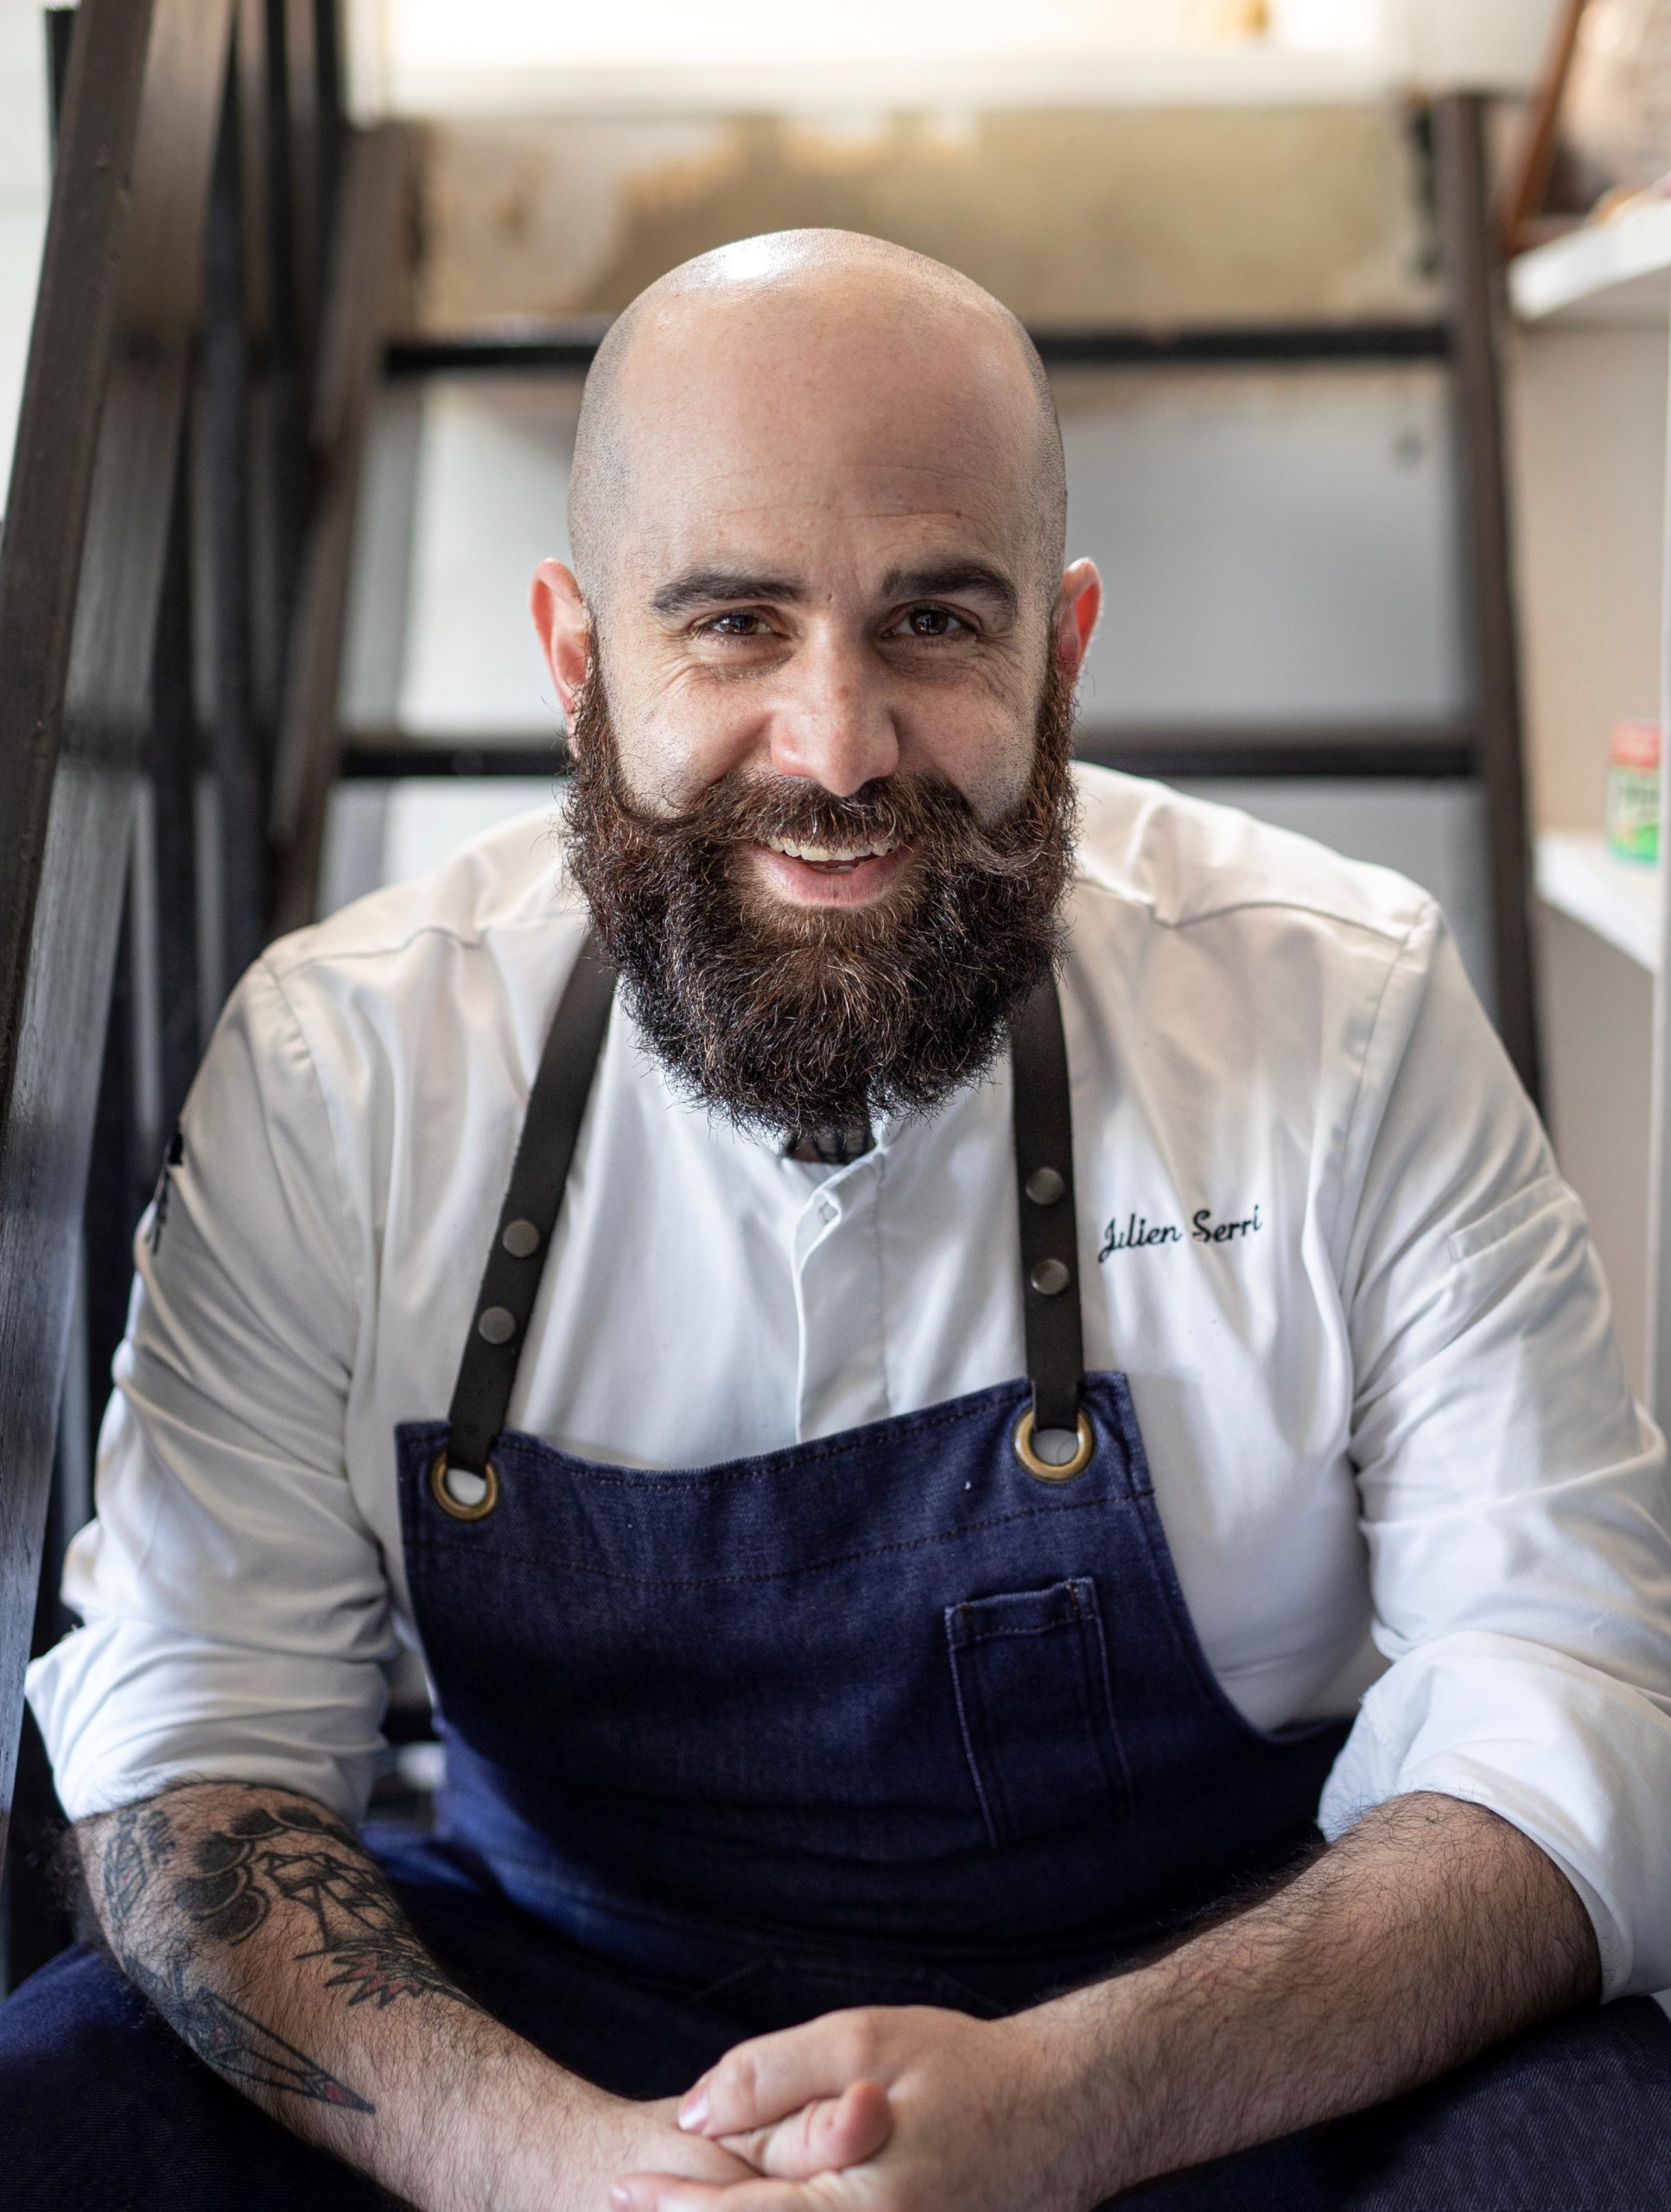 Portrait Julien Serri, crâne rasé et grande barbe souriante